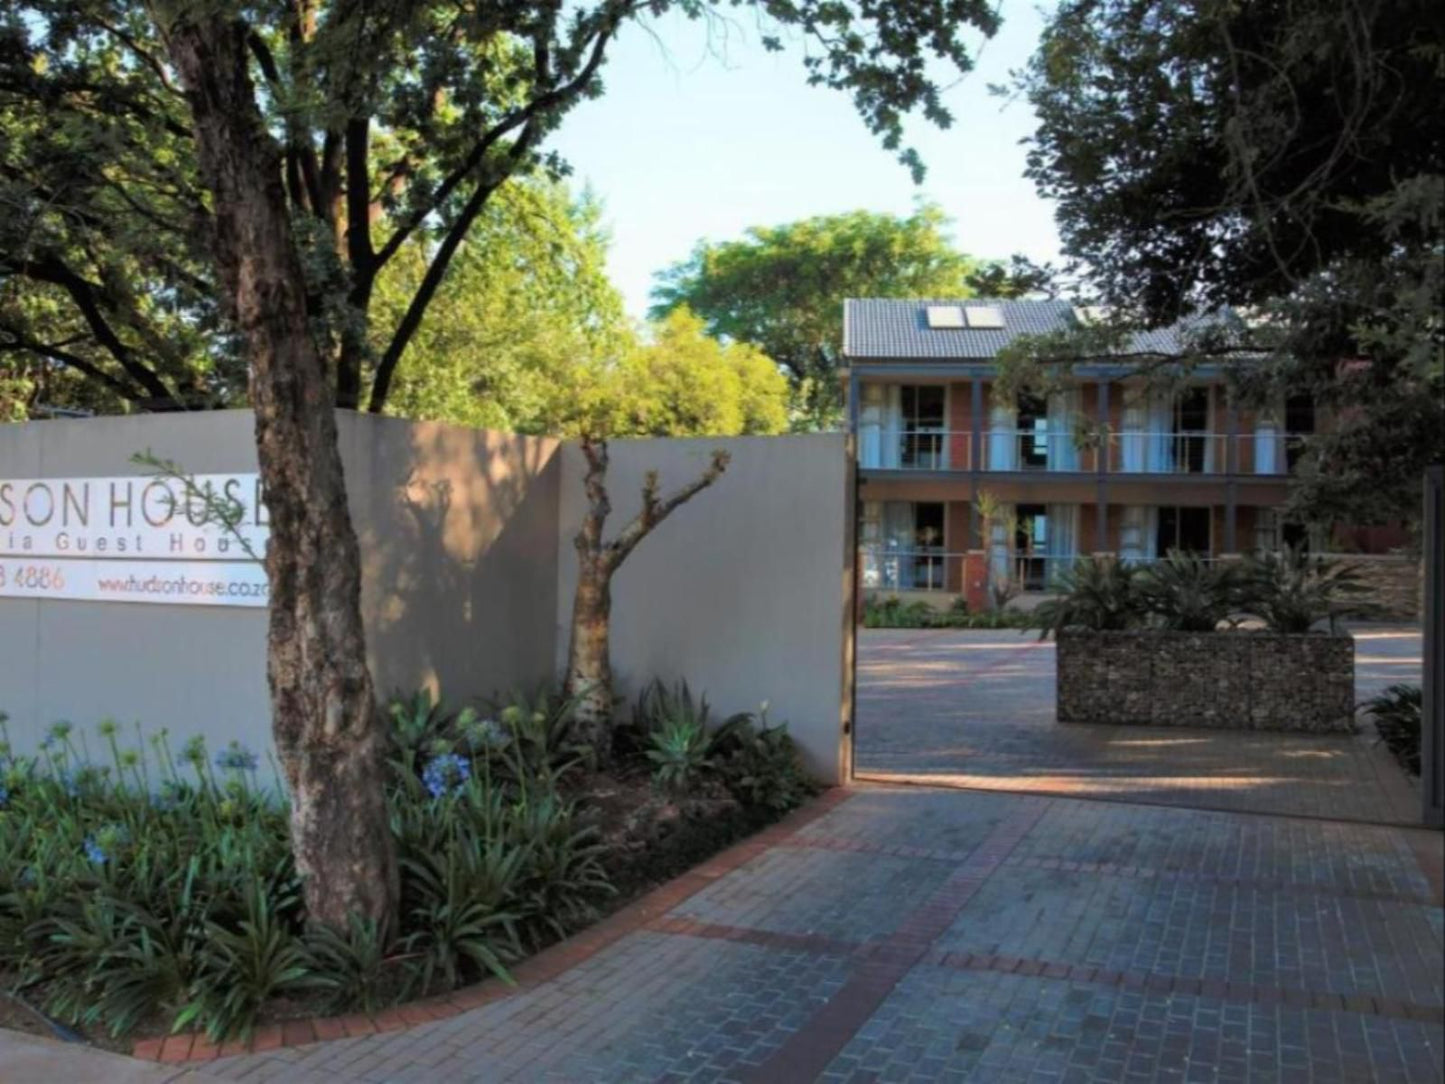 Hudson House Lynnwood Pretoria Tshwane Gauteng South Africa House, Building, Architecture, Palm Tree, Plant, Nature, Wood, Garden